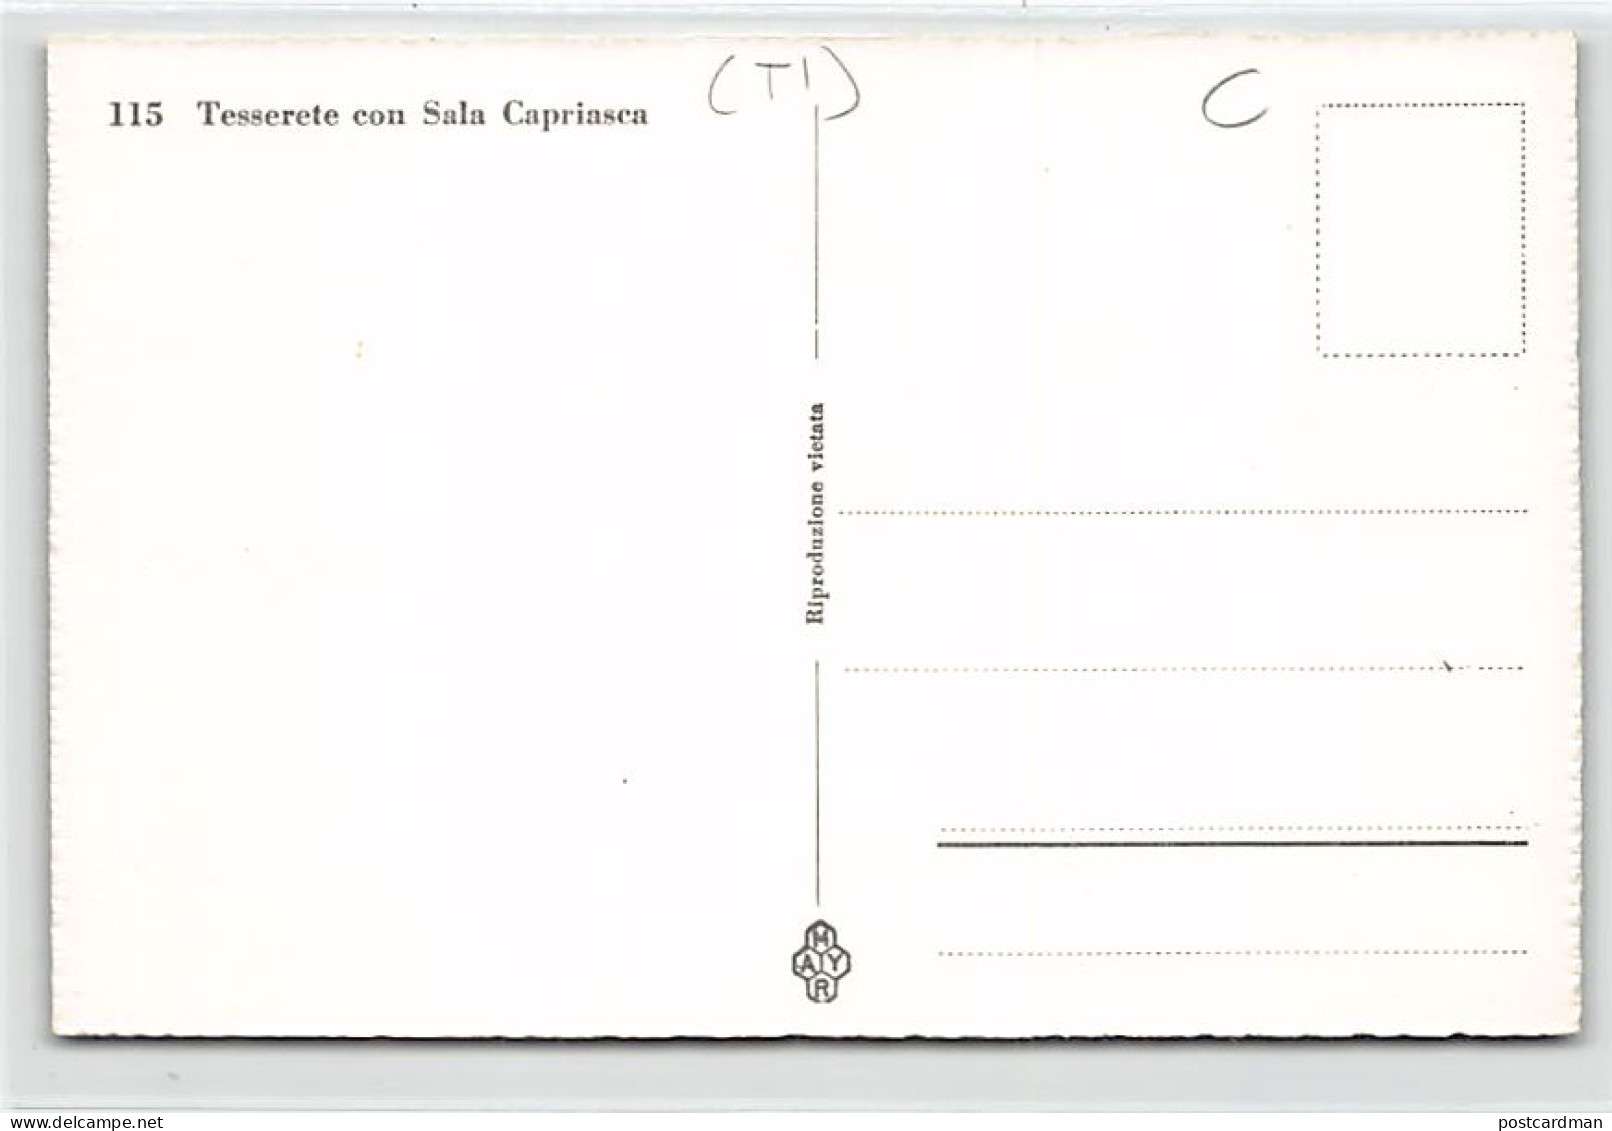 Svizzera - Tesserete (TI) Sala Capriasea - Ed. Ditta G. Mayr 115 - Tesserete 